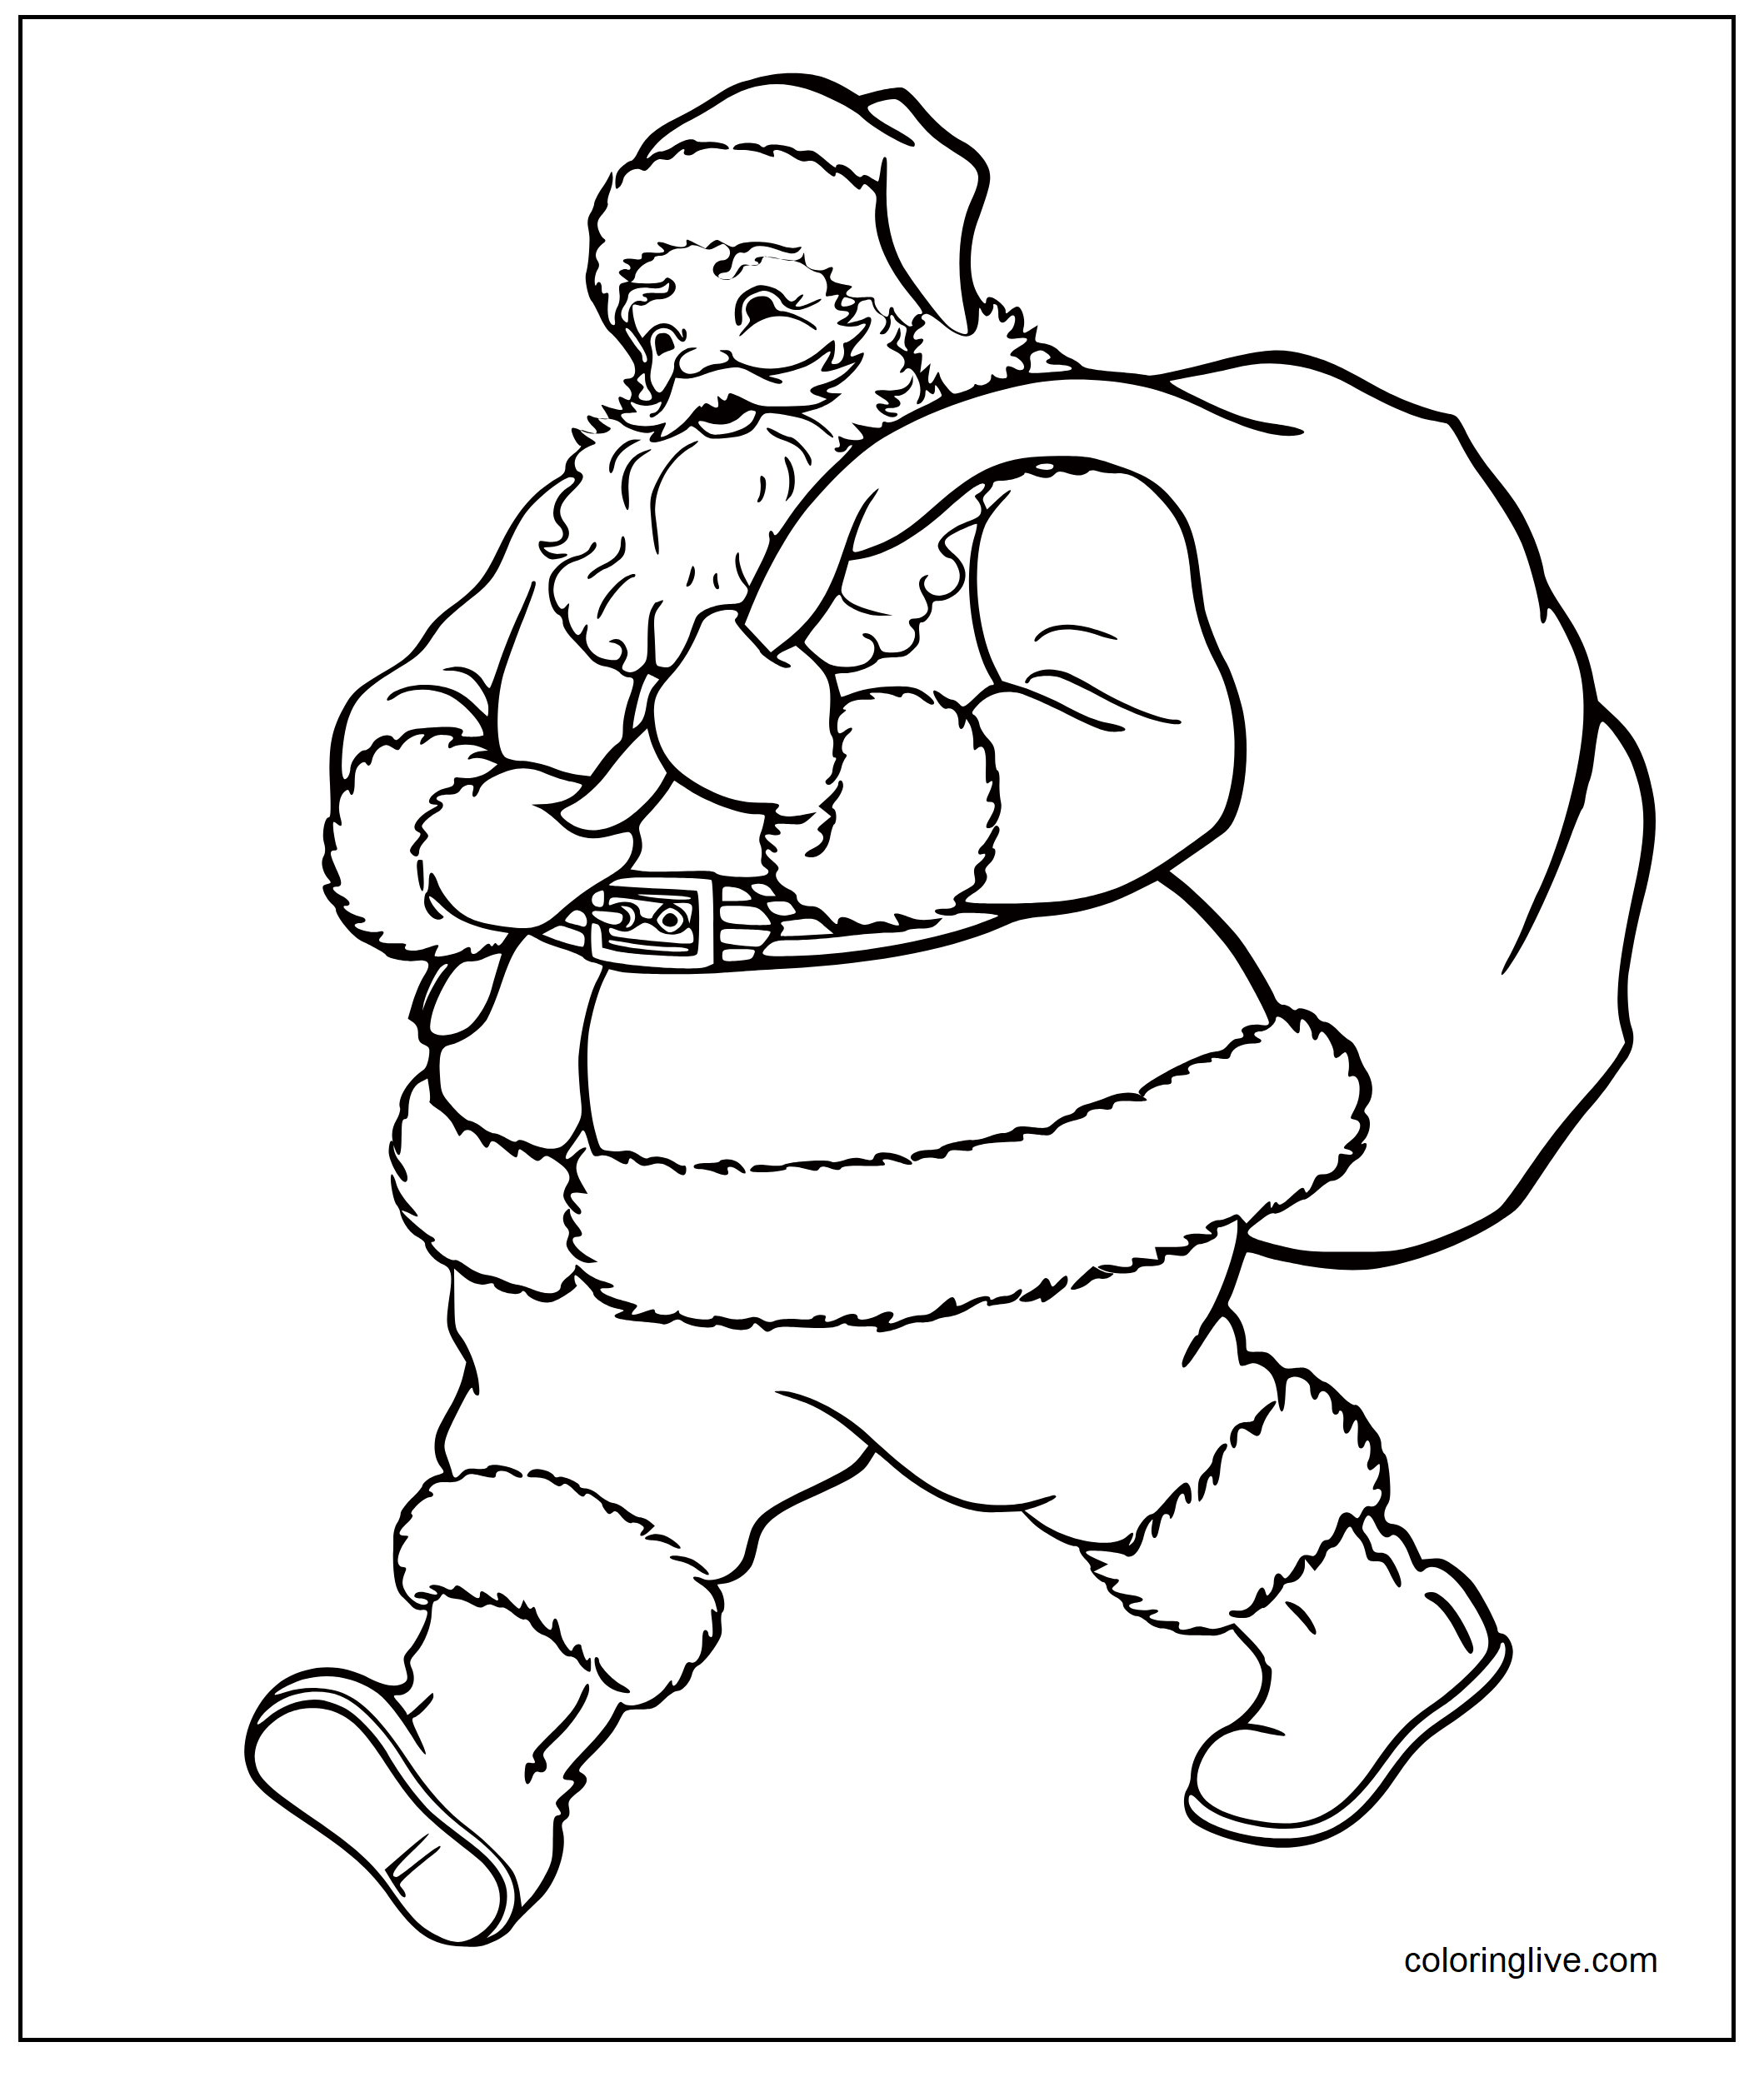 Printable Santa's gift bag Coloring Page for kids.